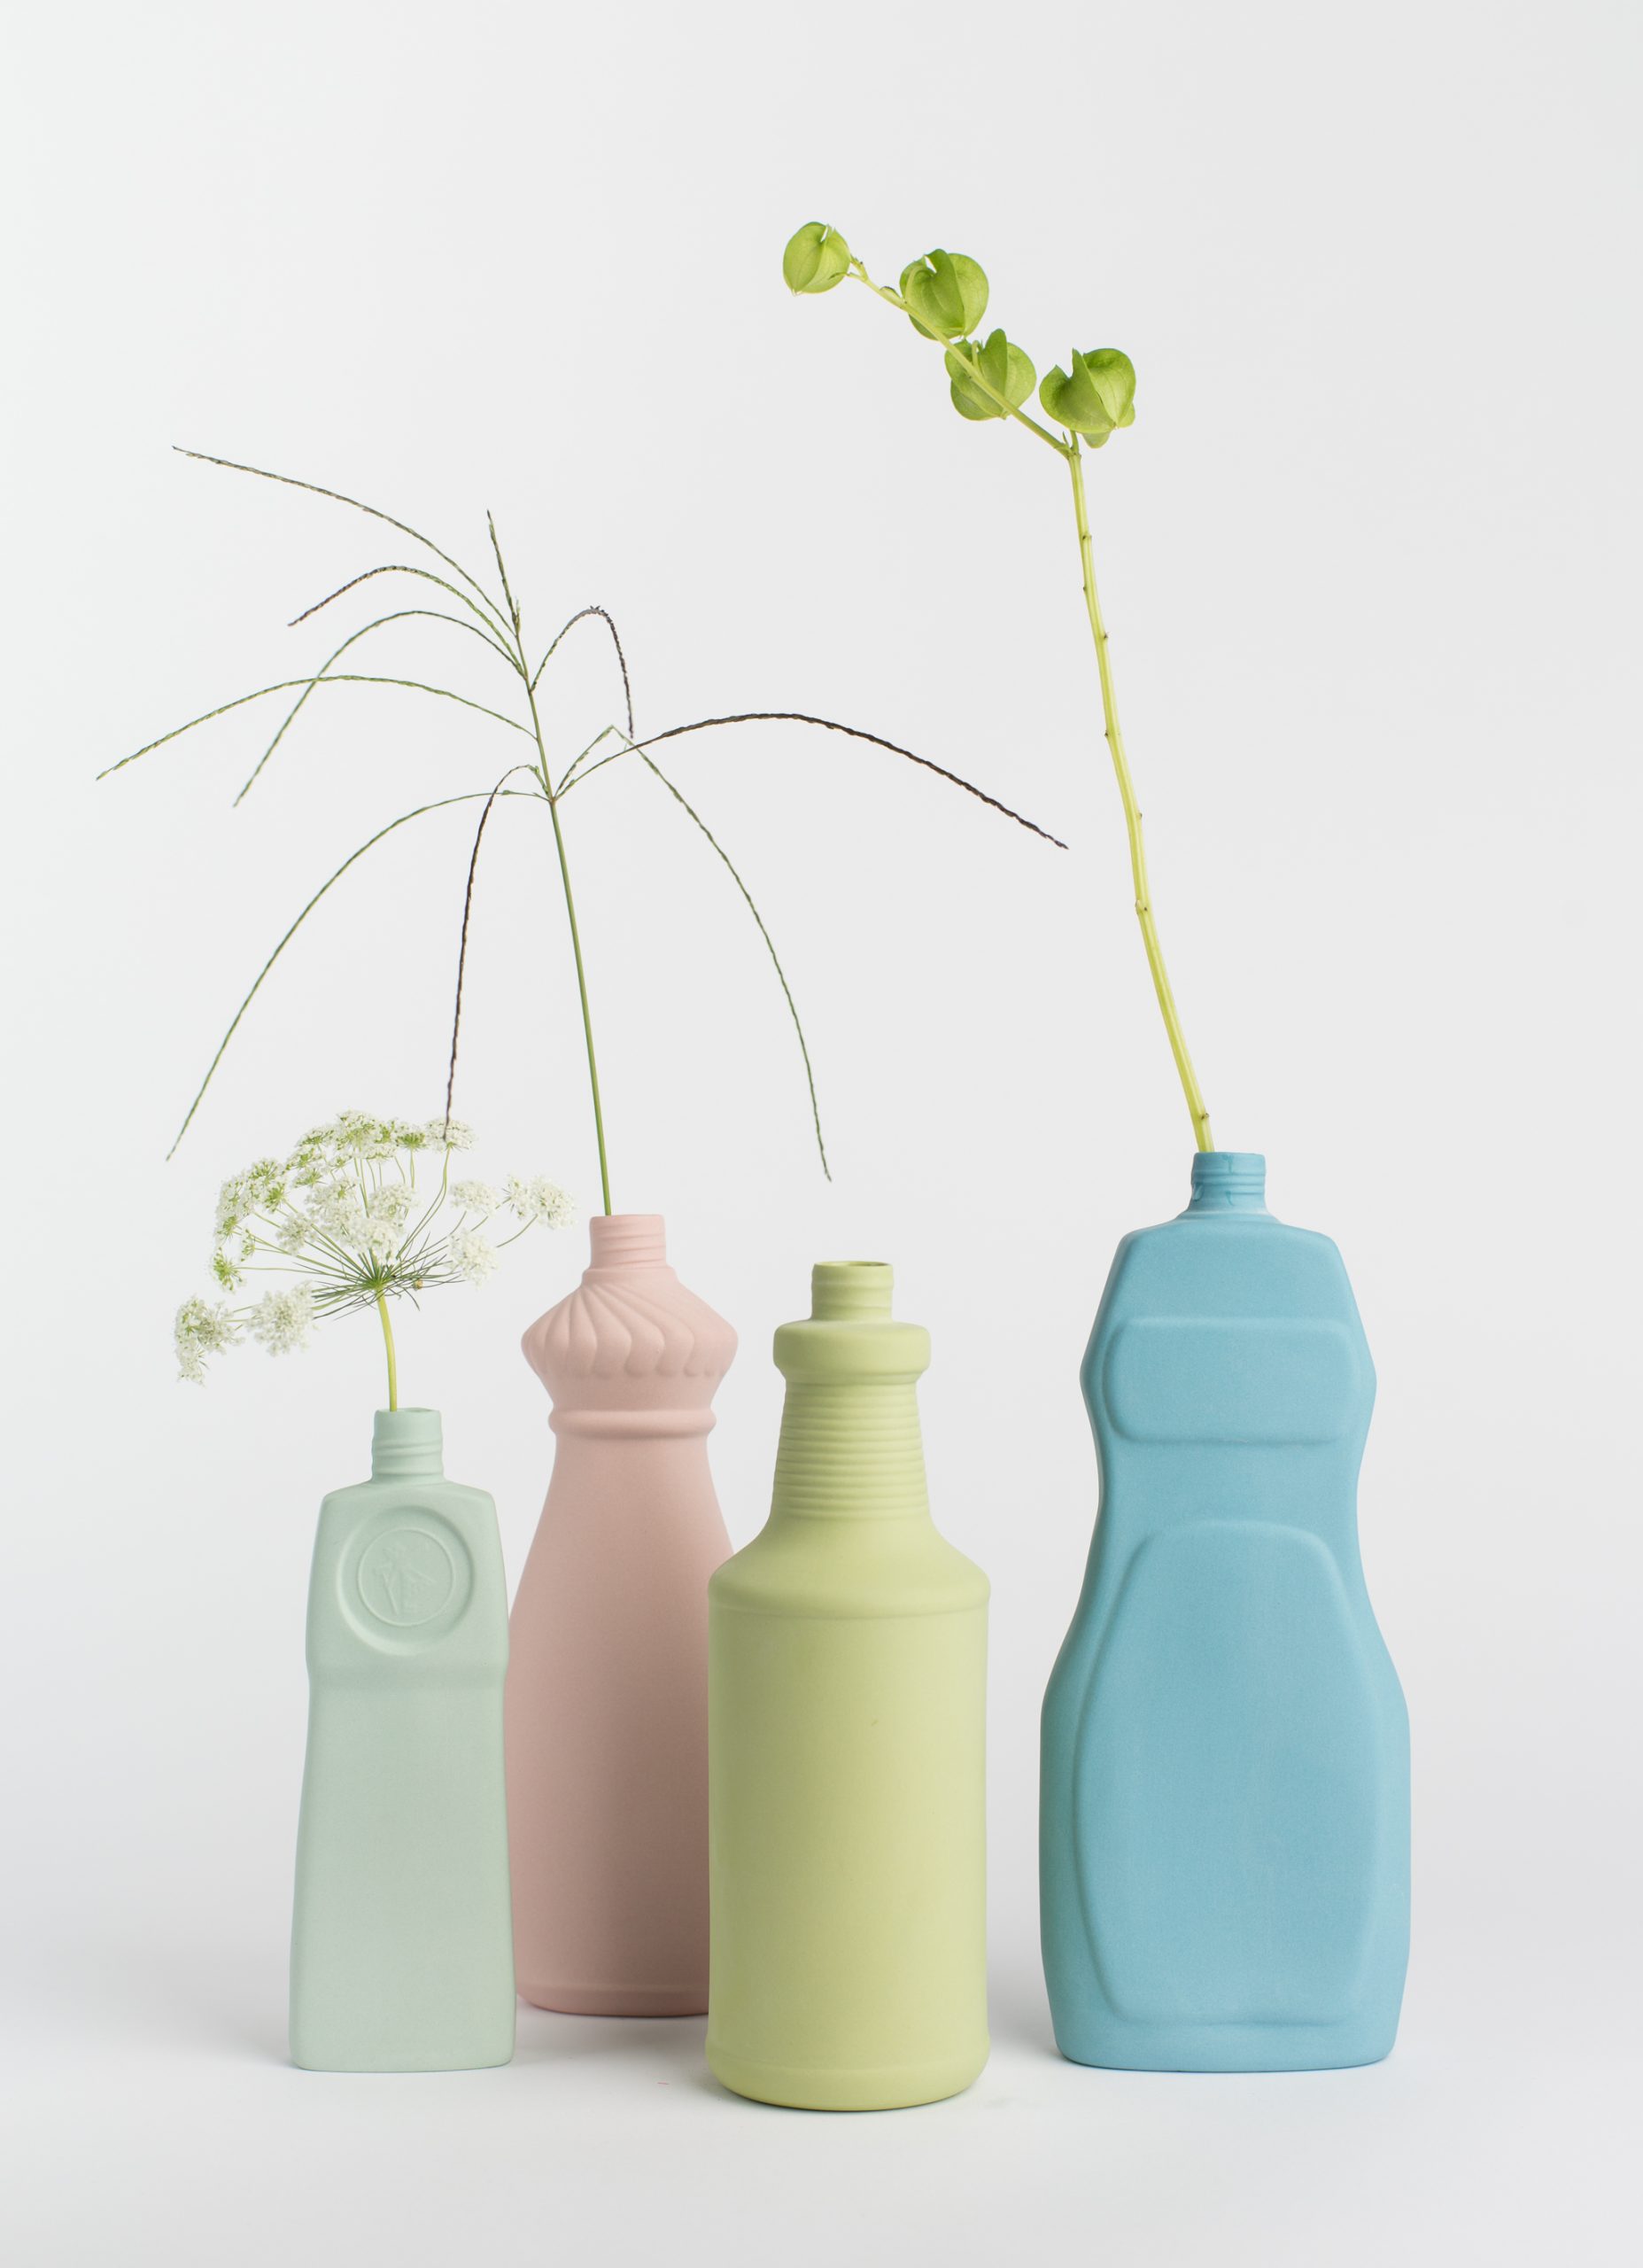 group photo porcelain vases